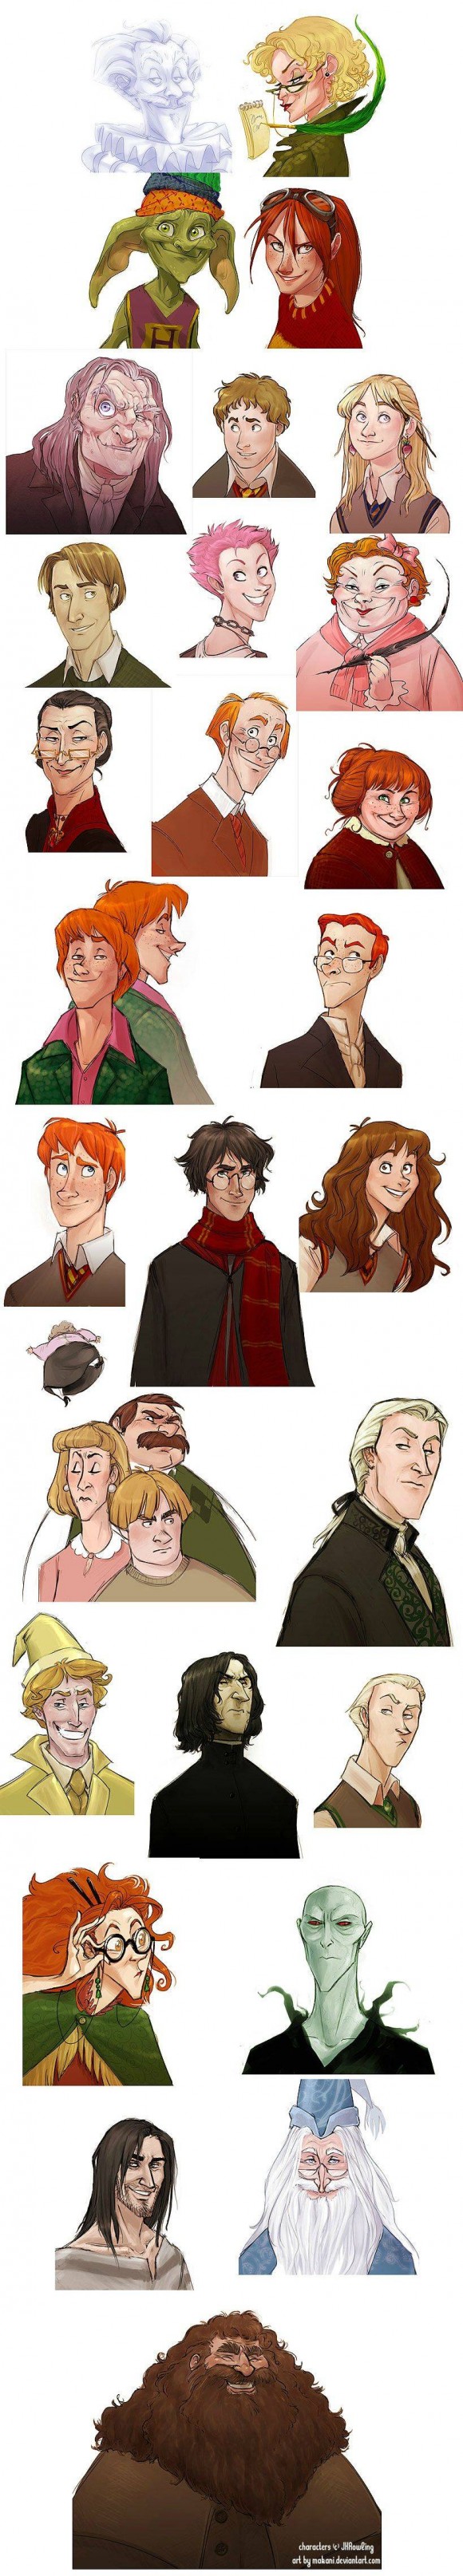 Harry Potter Disney